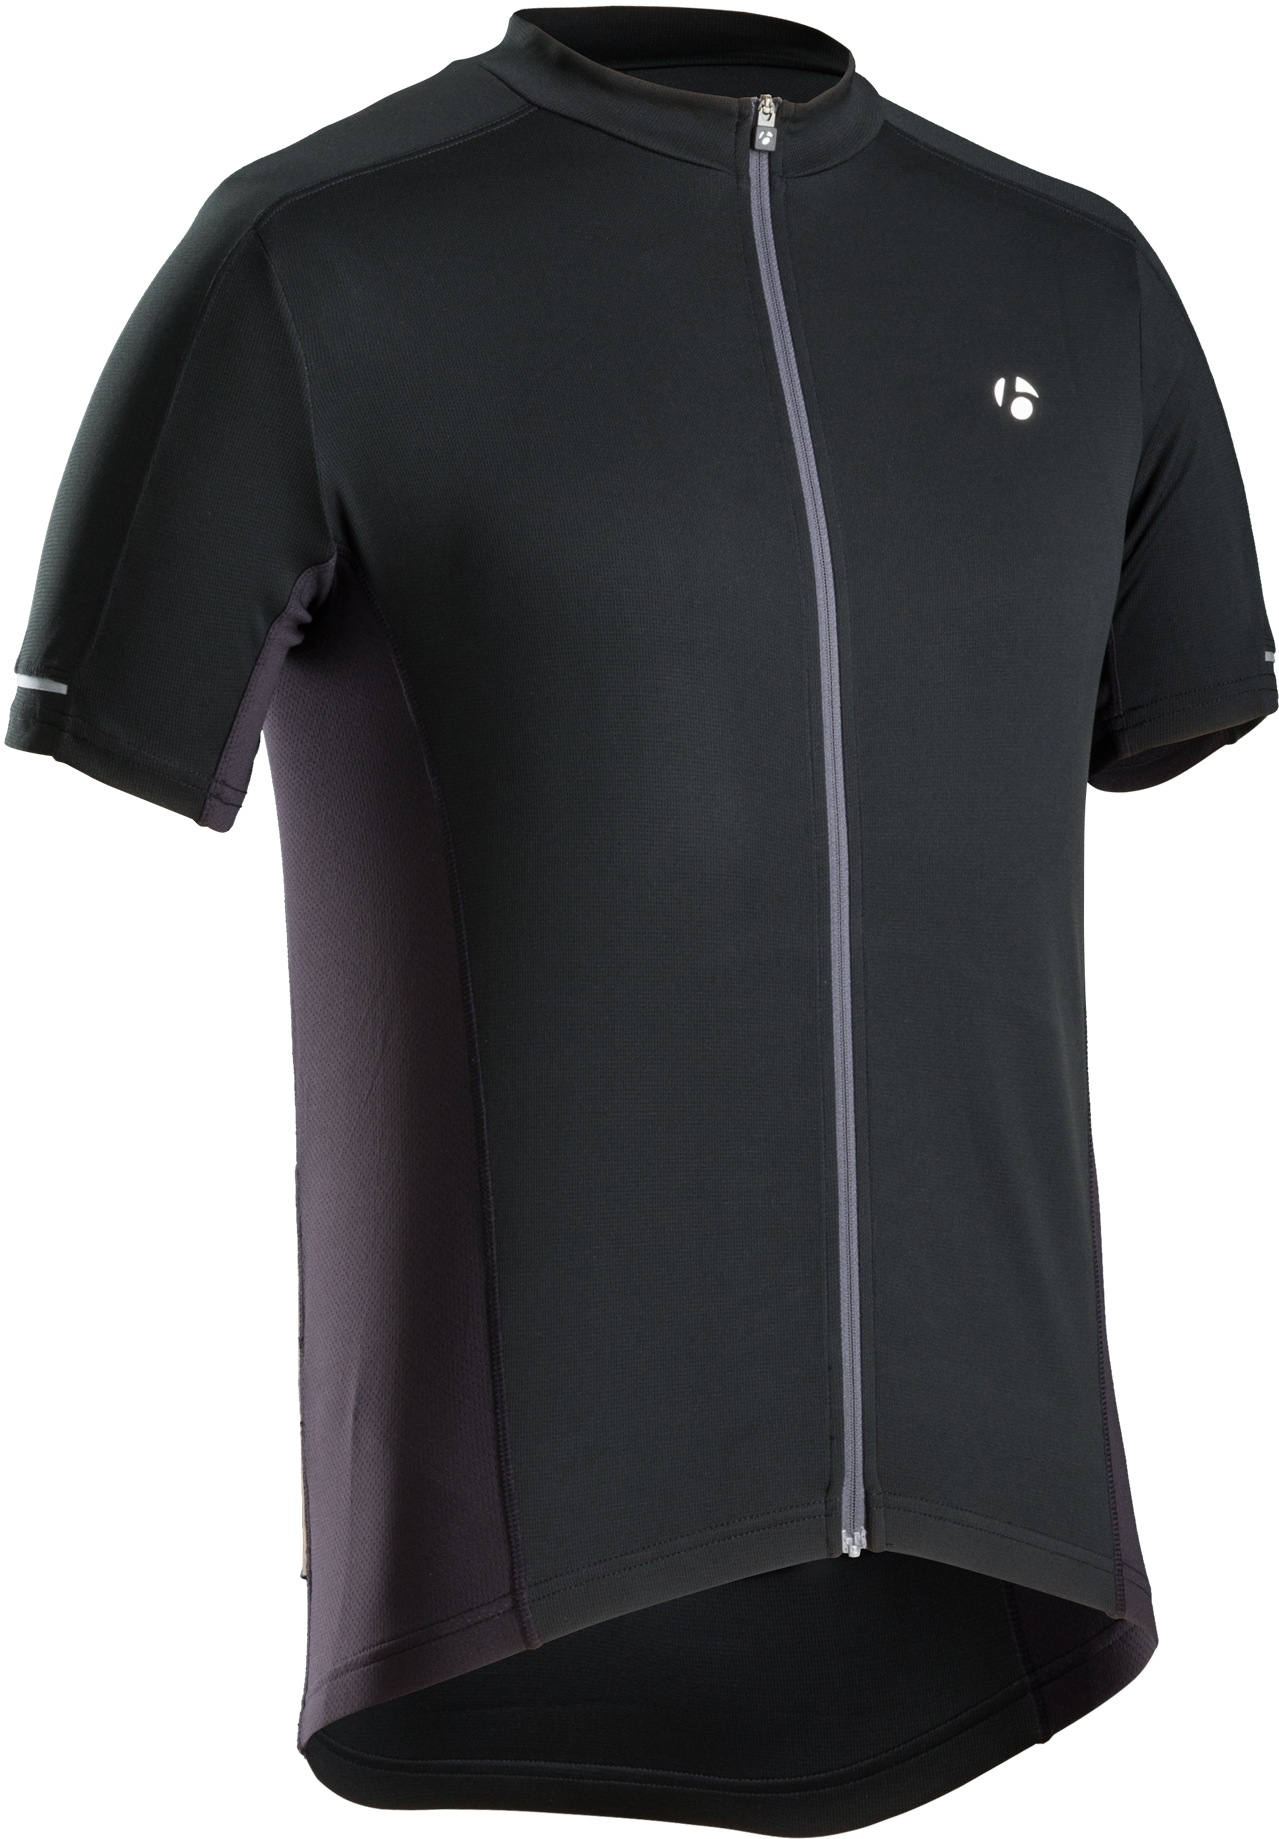 Bontrager Starvos Cycling Jersey - Mens - Jerseys - Clothing - Shop ...